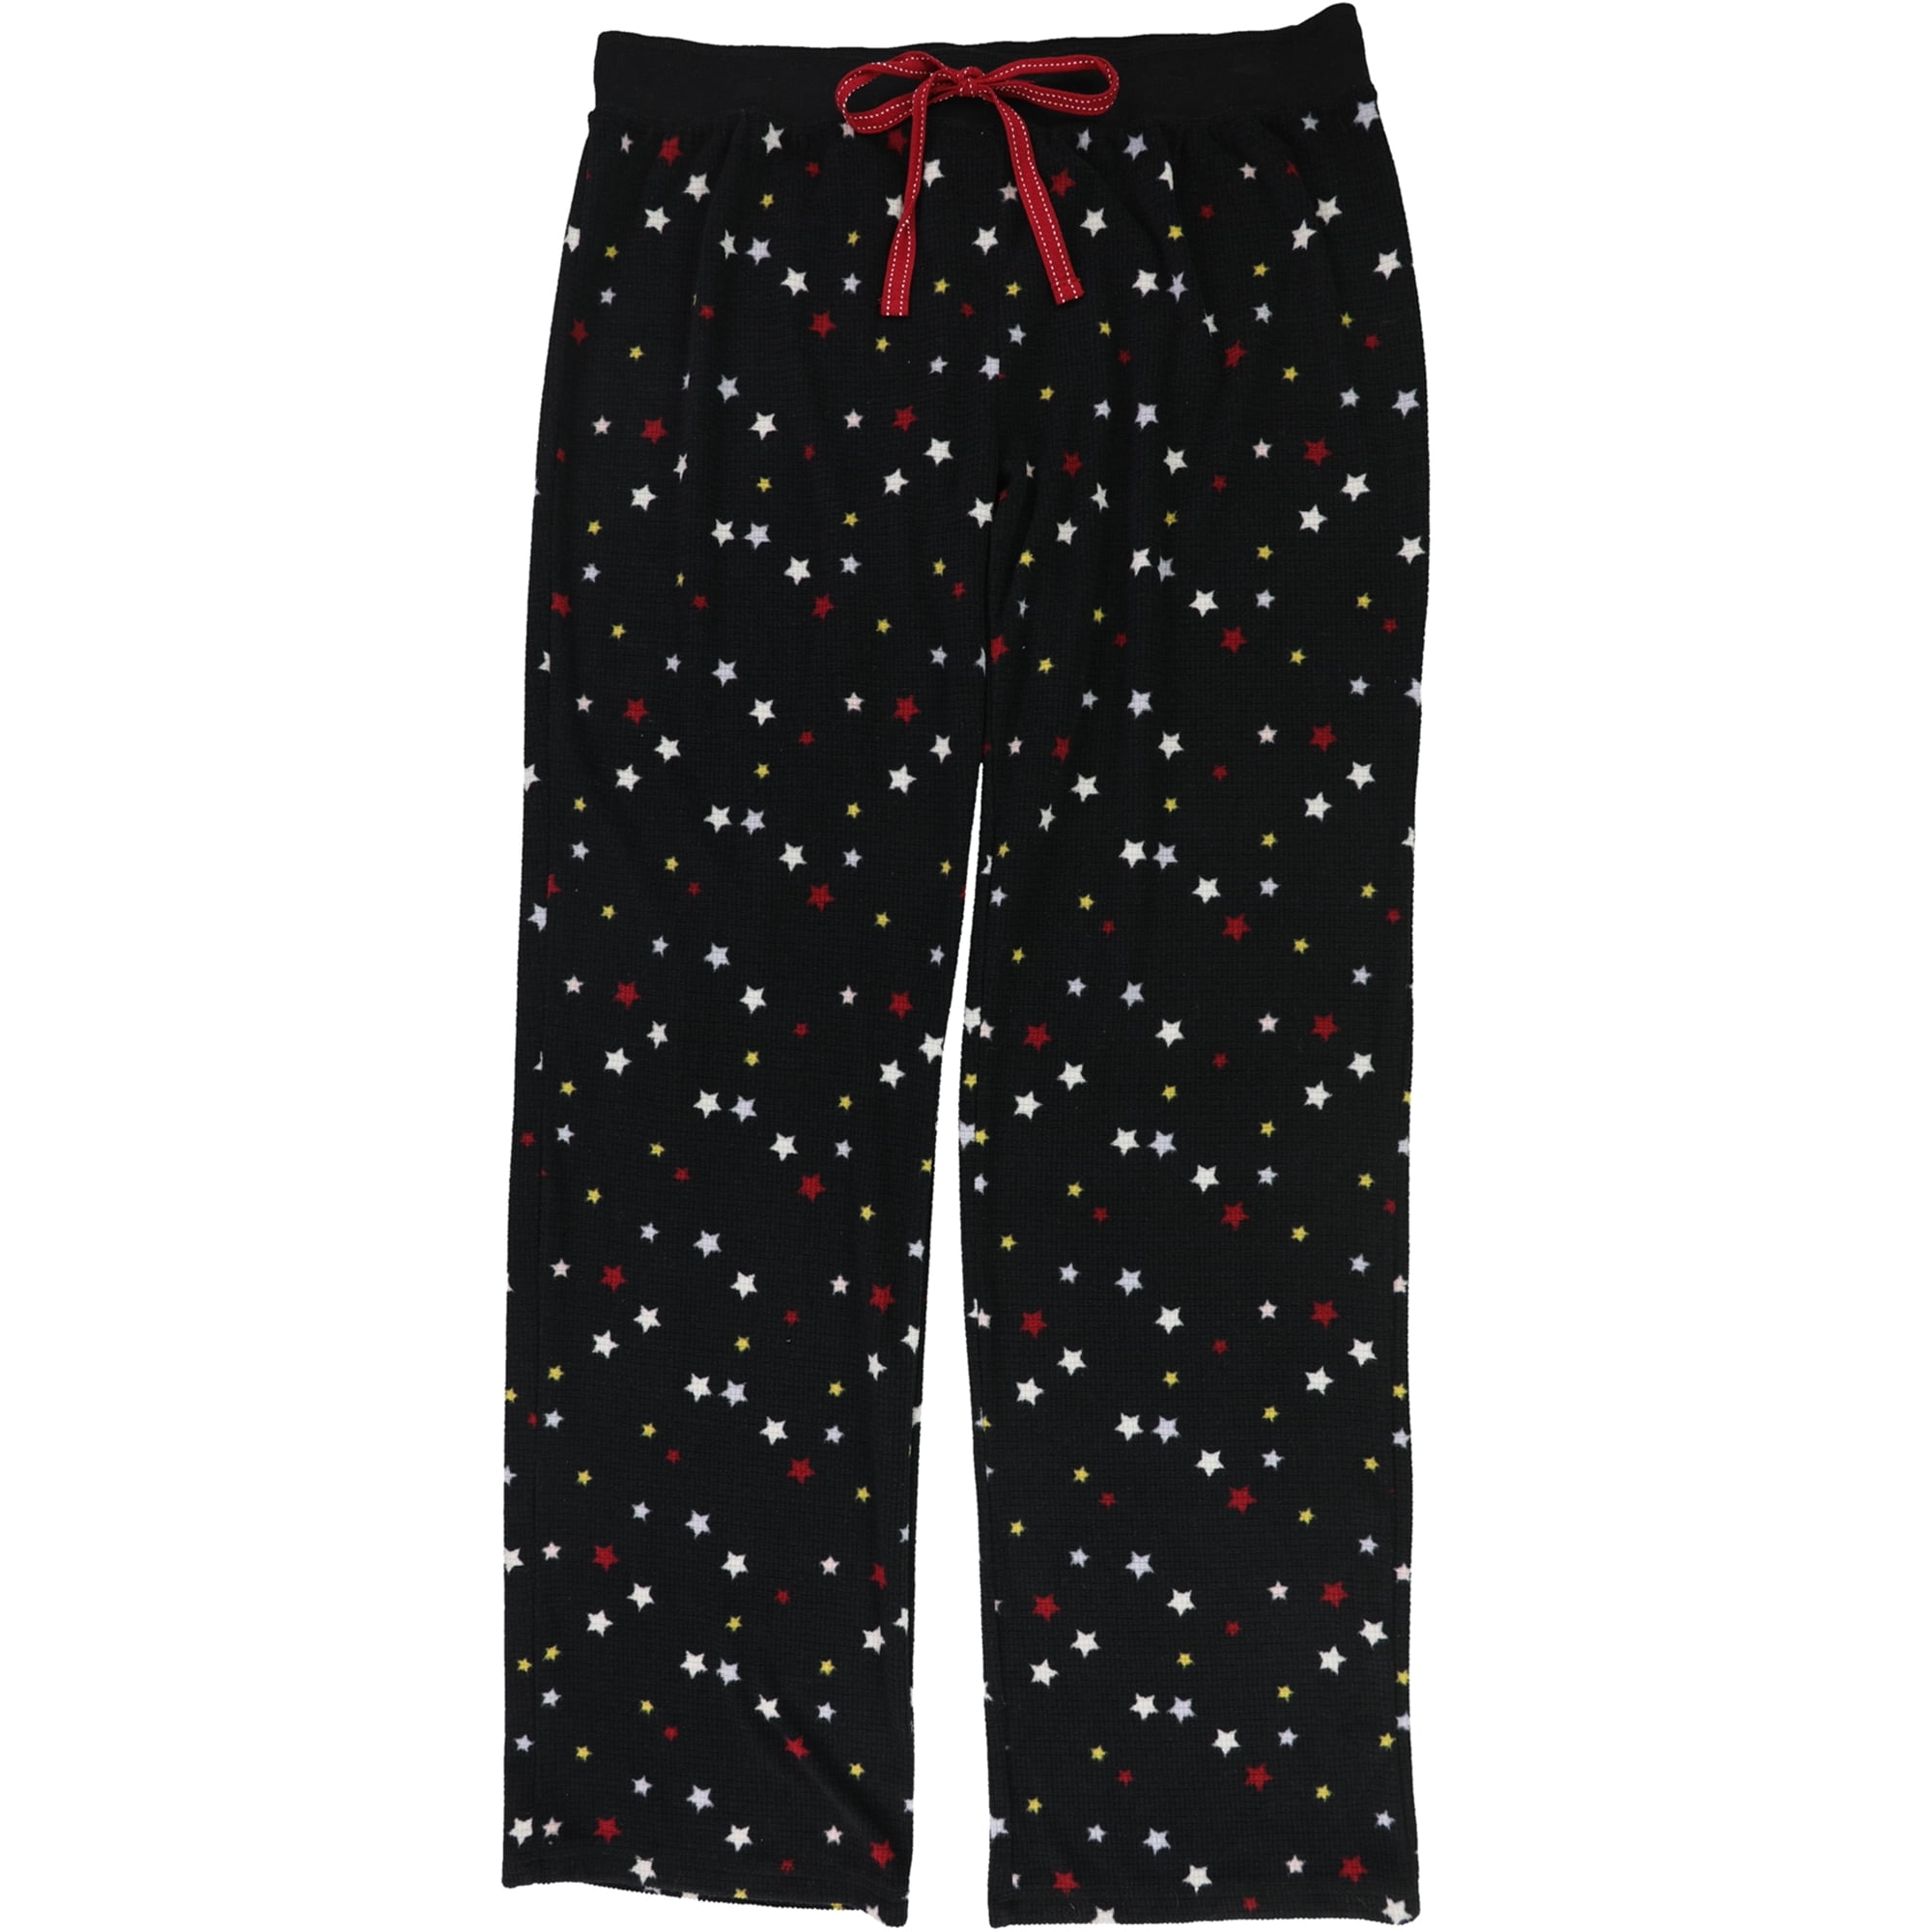 P.J. Salvage Womens Stars Thermal Pajama Pants, Black, X-Large 